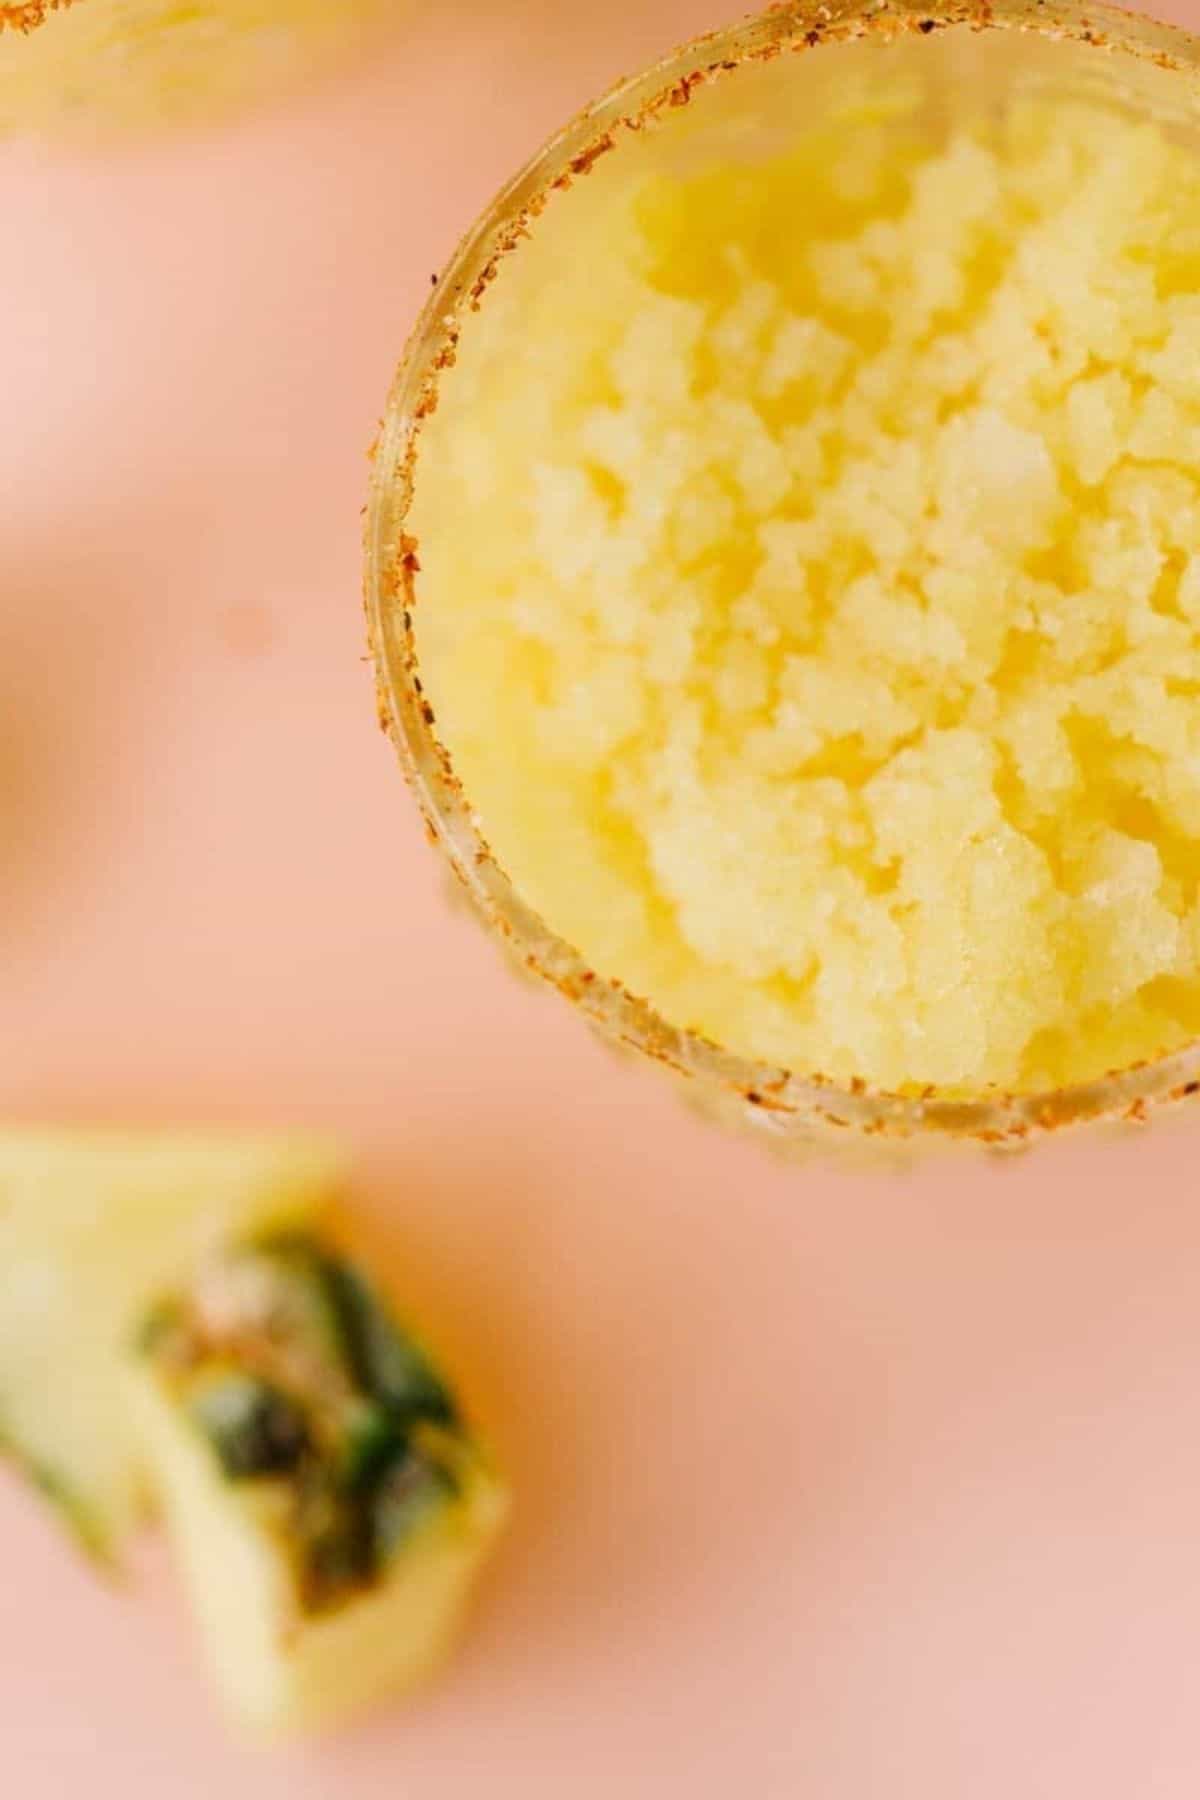 pineapple mango margarita granita showing detail of ice shavings